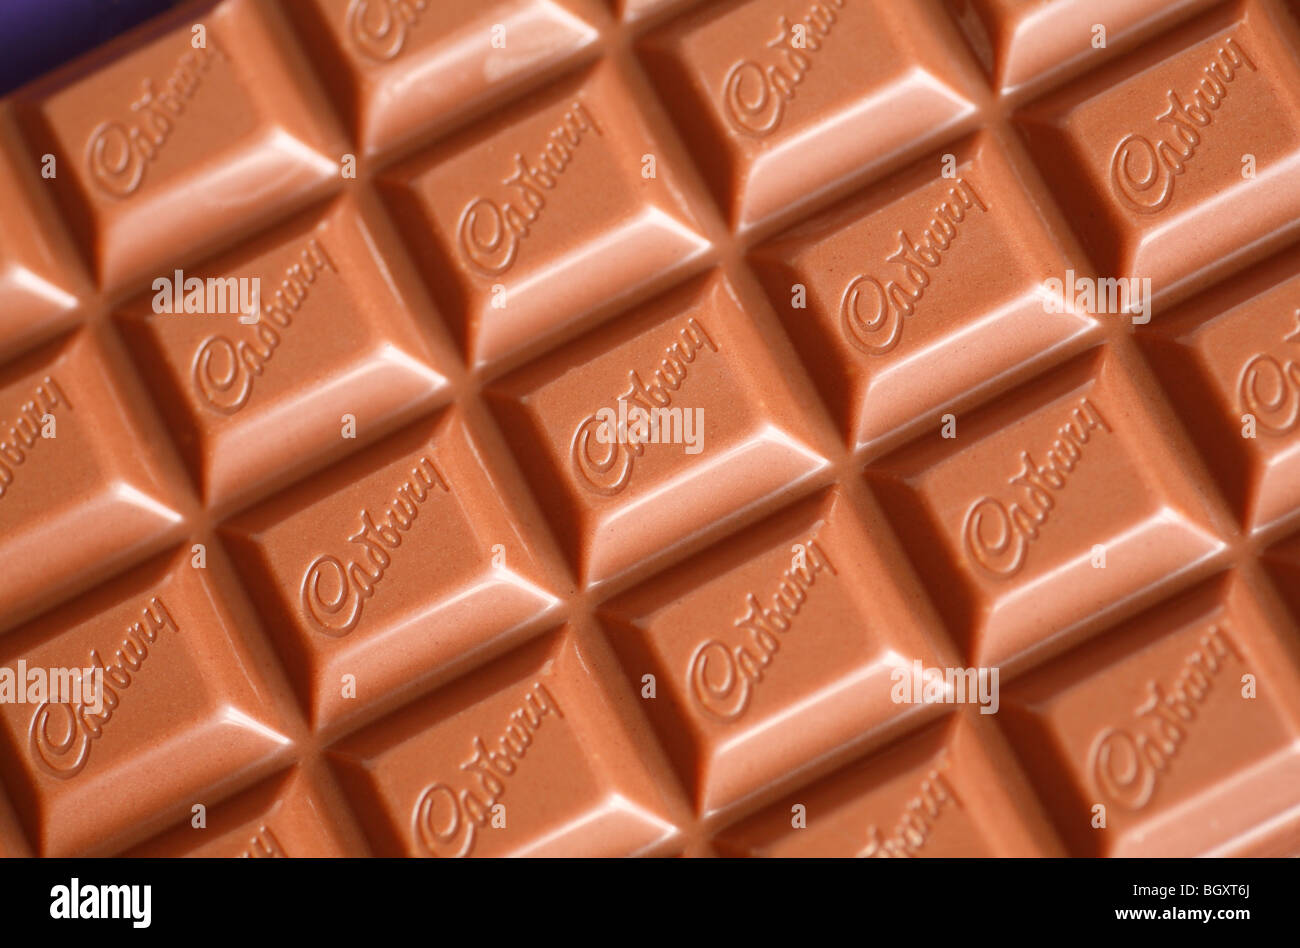 A bar of Cadbury's milk chocolate, featuring the Cadbury's logo. Stock Photo